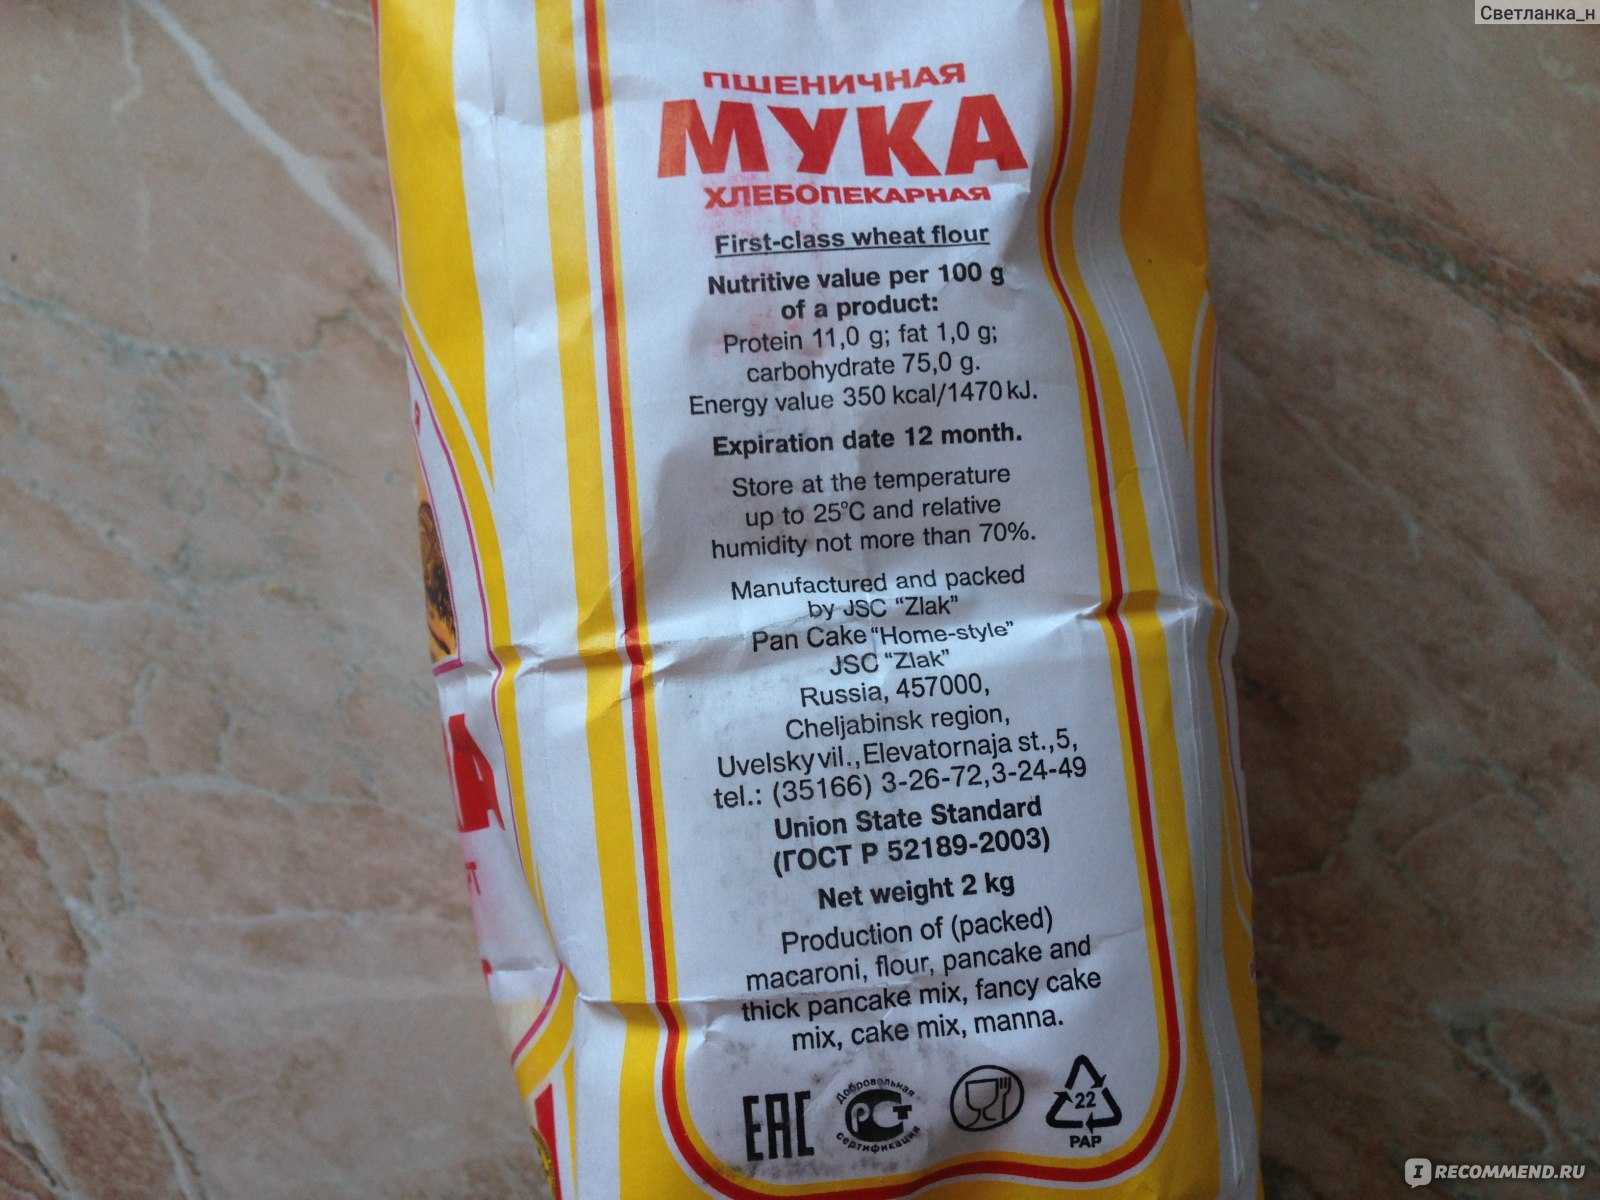 Мука - flour - abcdef.wiki